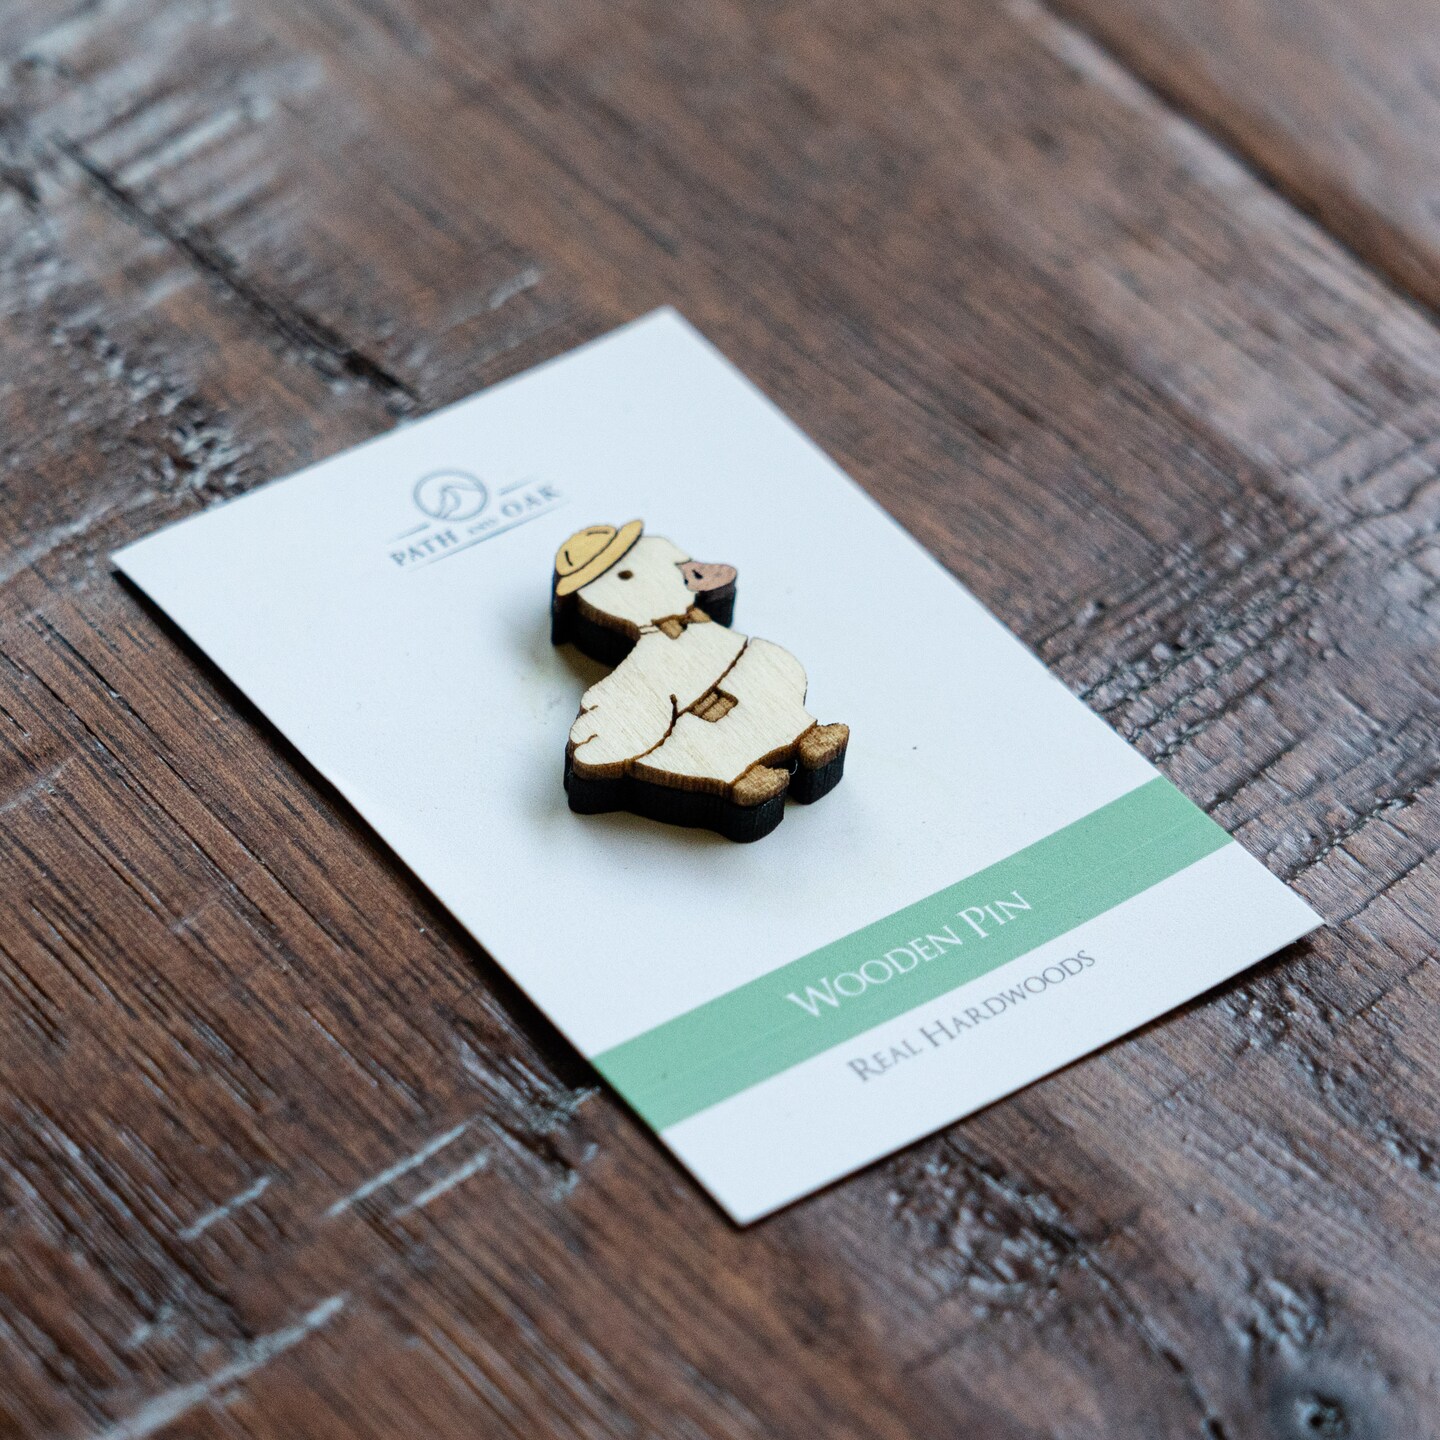 Cute Duck Wood Pin, Wooden brooch, lapel pin duck gift, funny animal pin in  enamel pin style